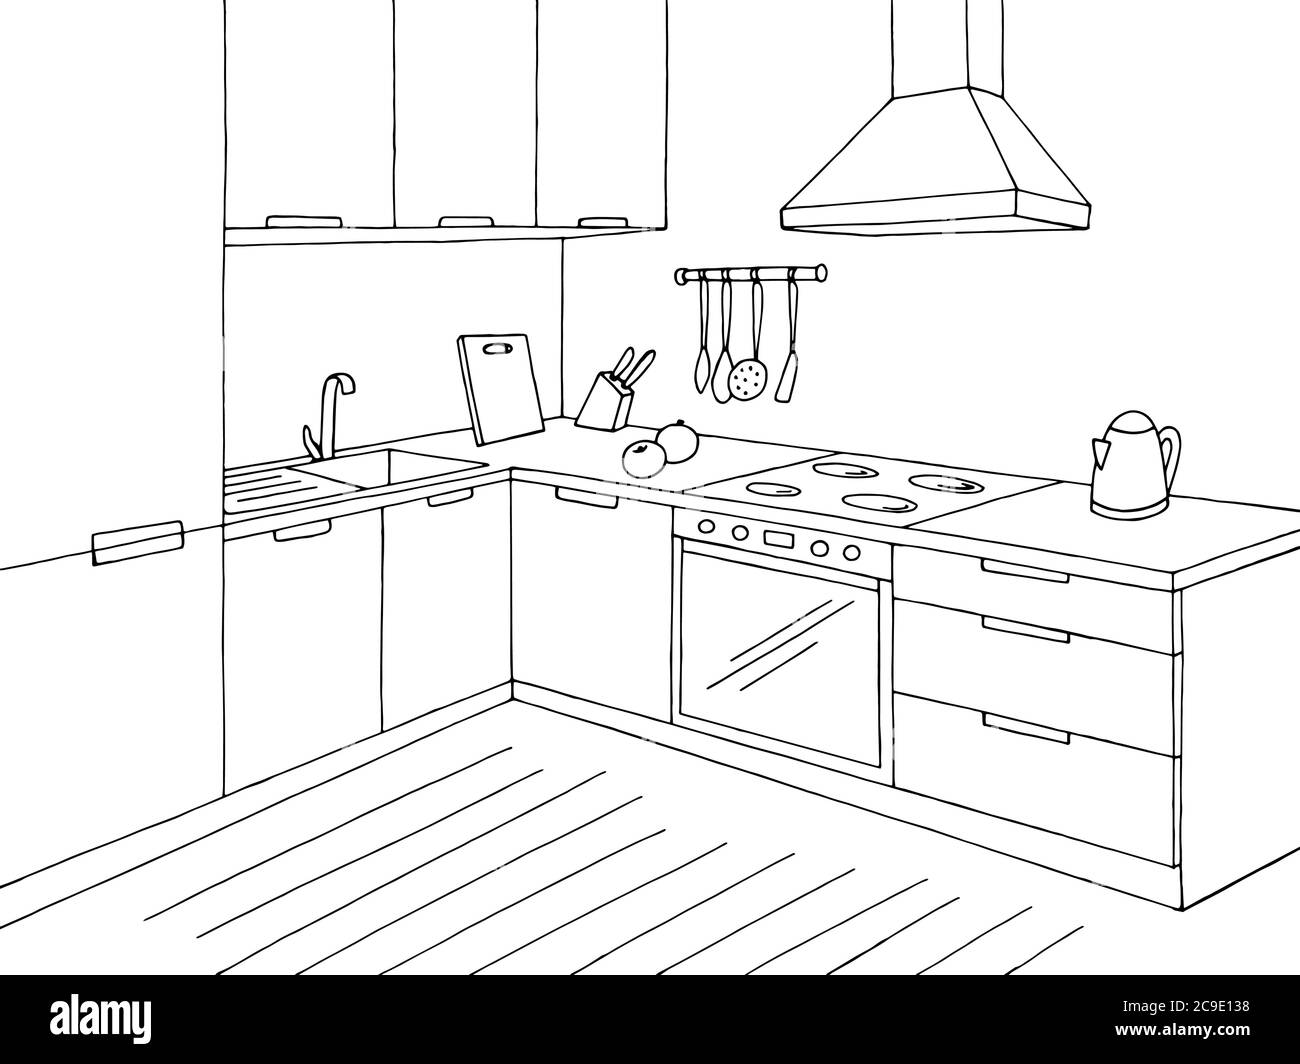 kitchen interior - 25 Free Vectors to Download | FreeVectors